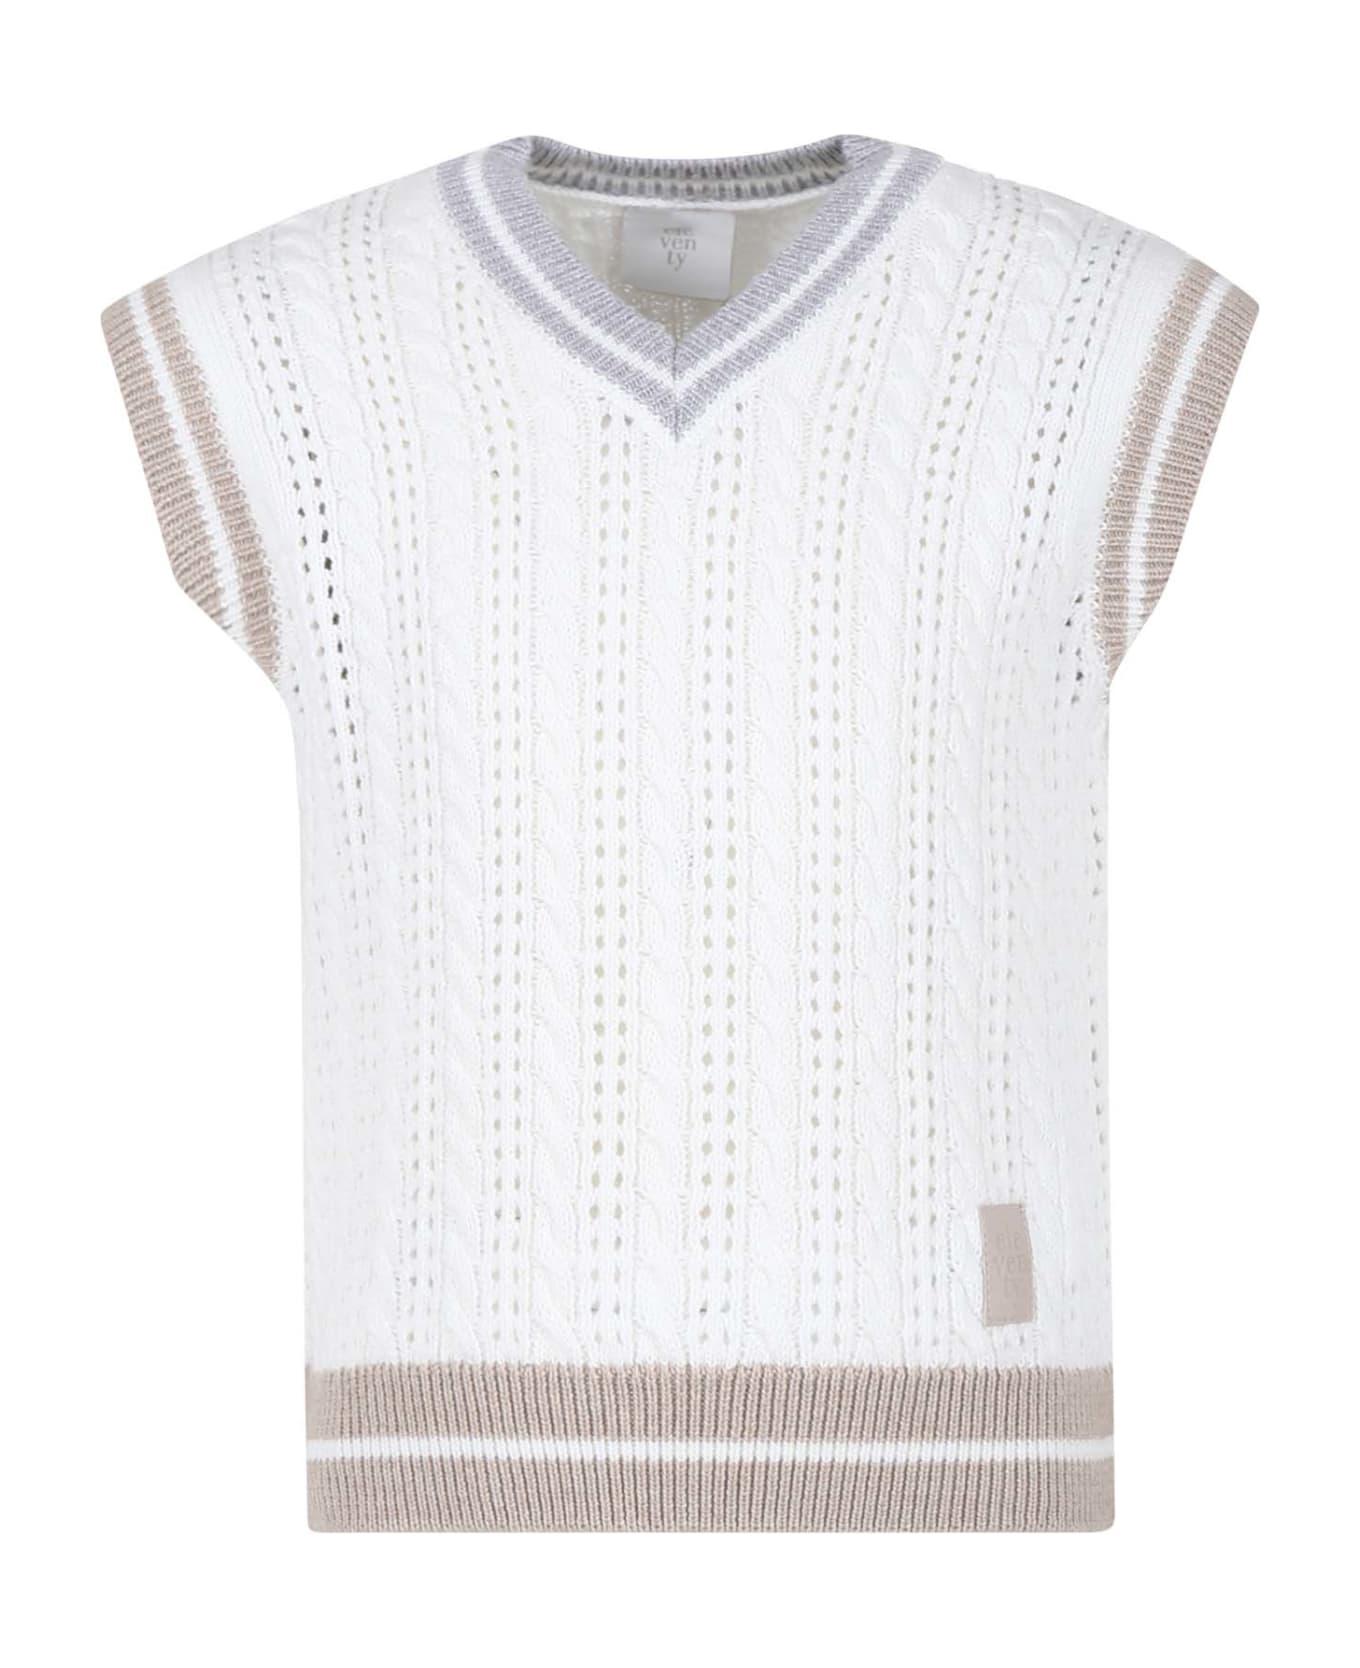 Eleventy Ivory Vest Sweater For Boy With Logo - Ivory